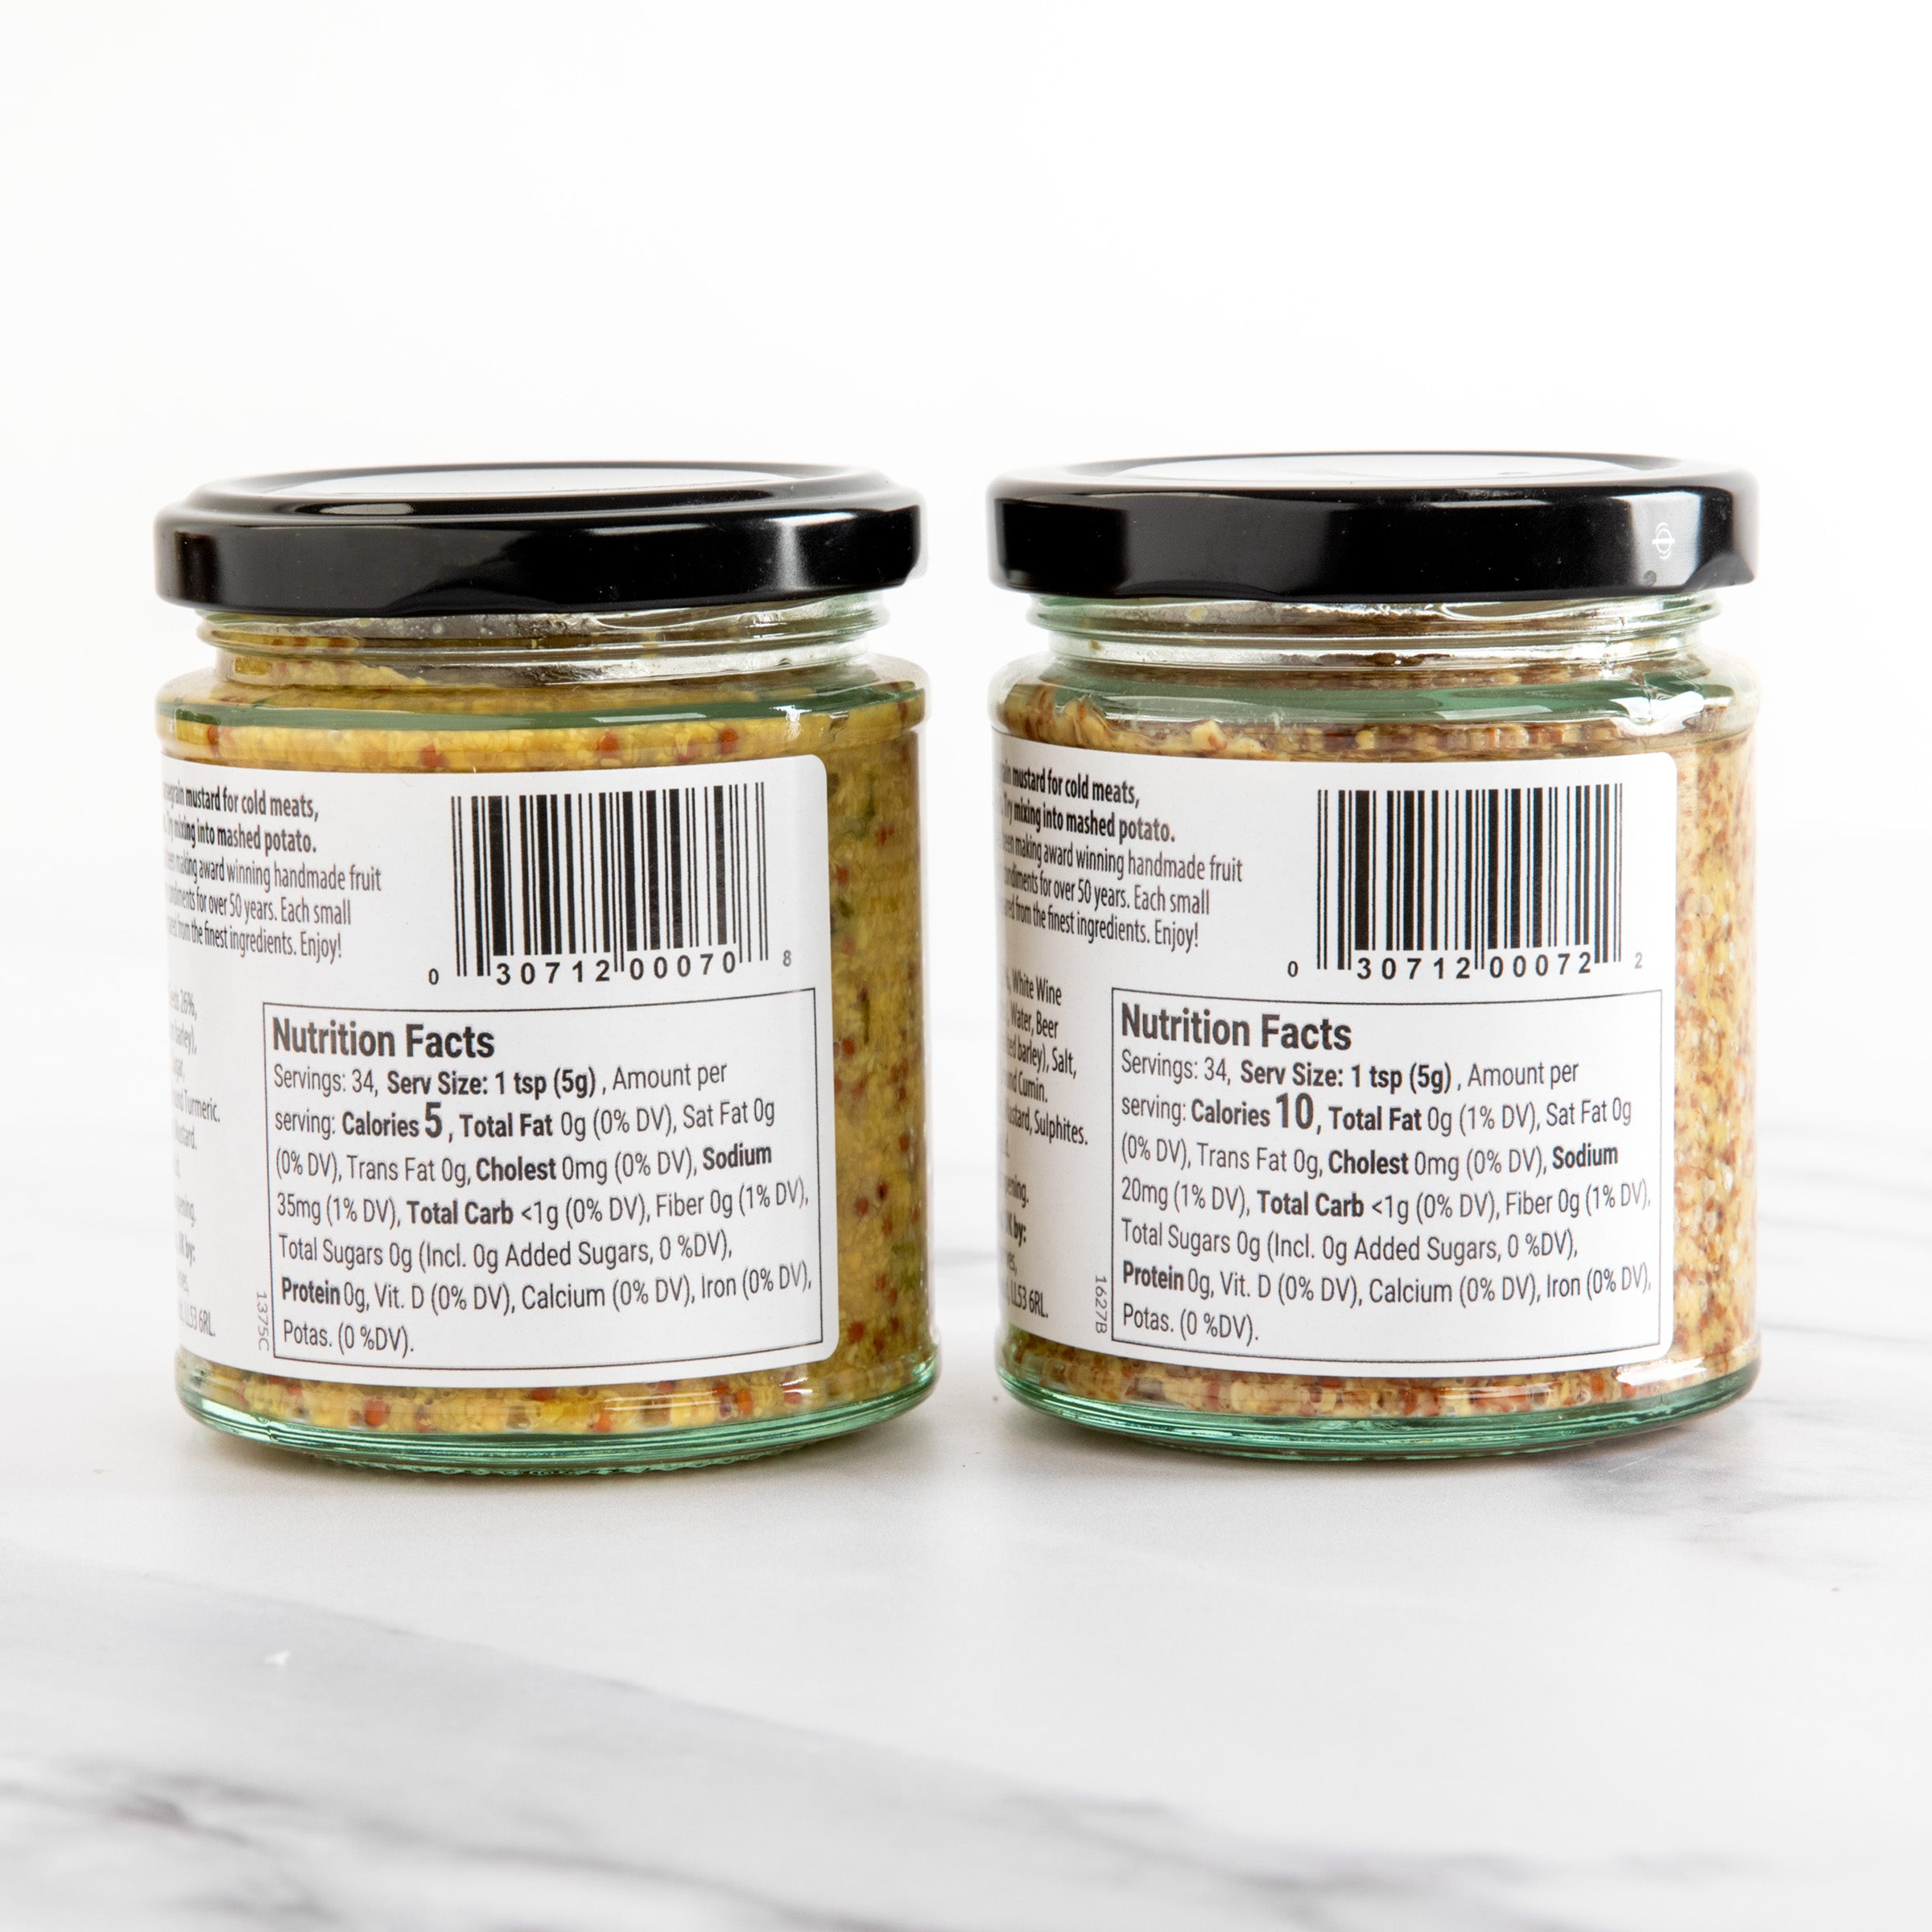 igourmet_13676_Mustard_Welsh Lady_Condiments & Spreads